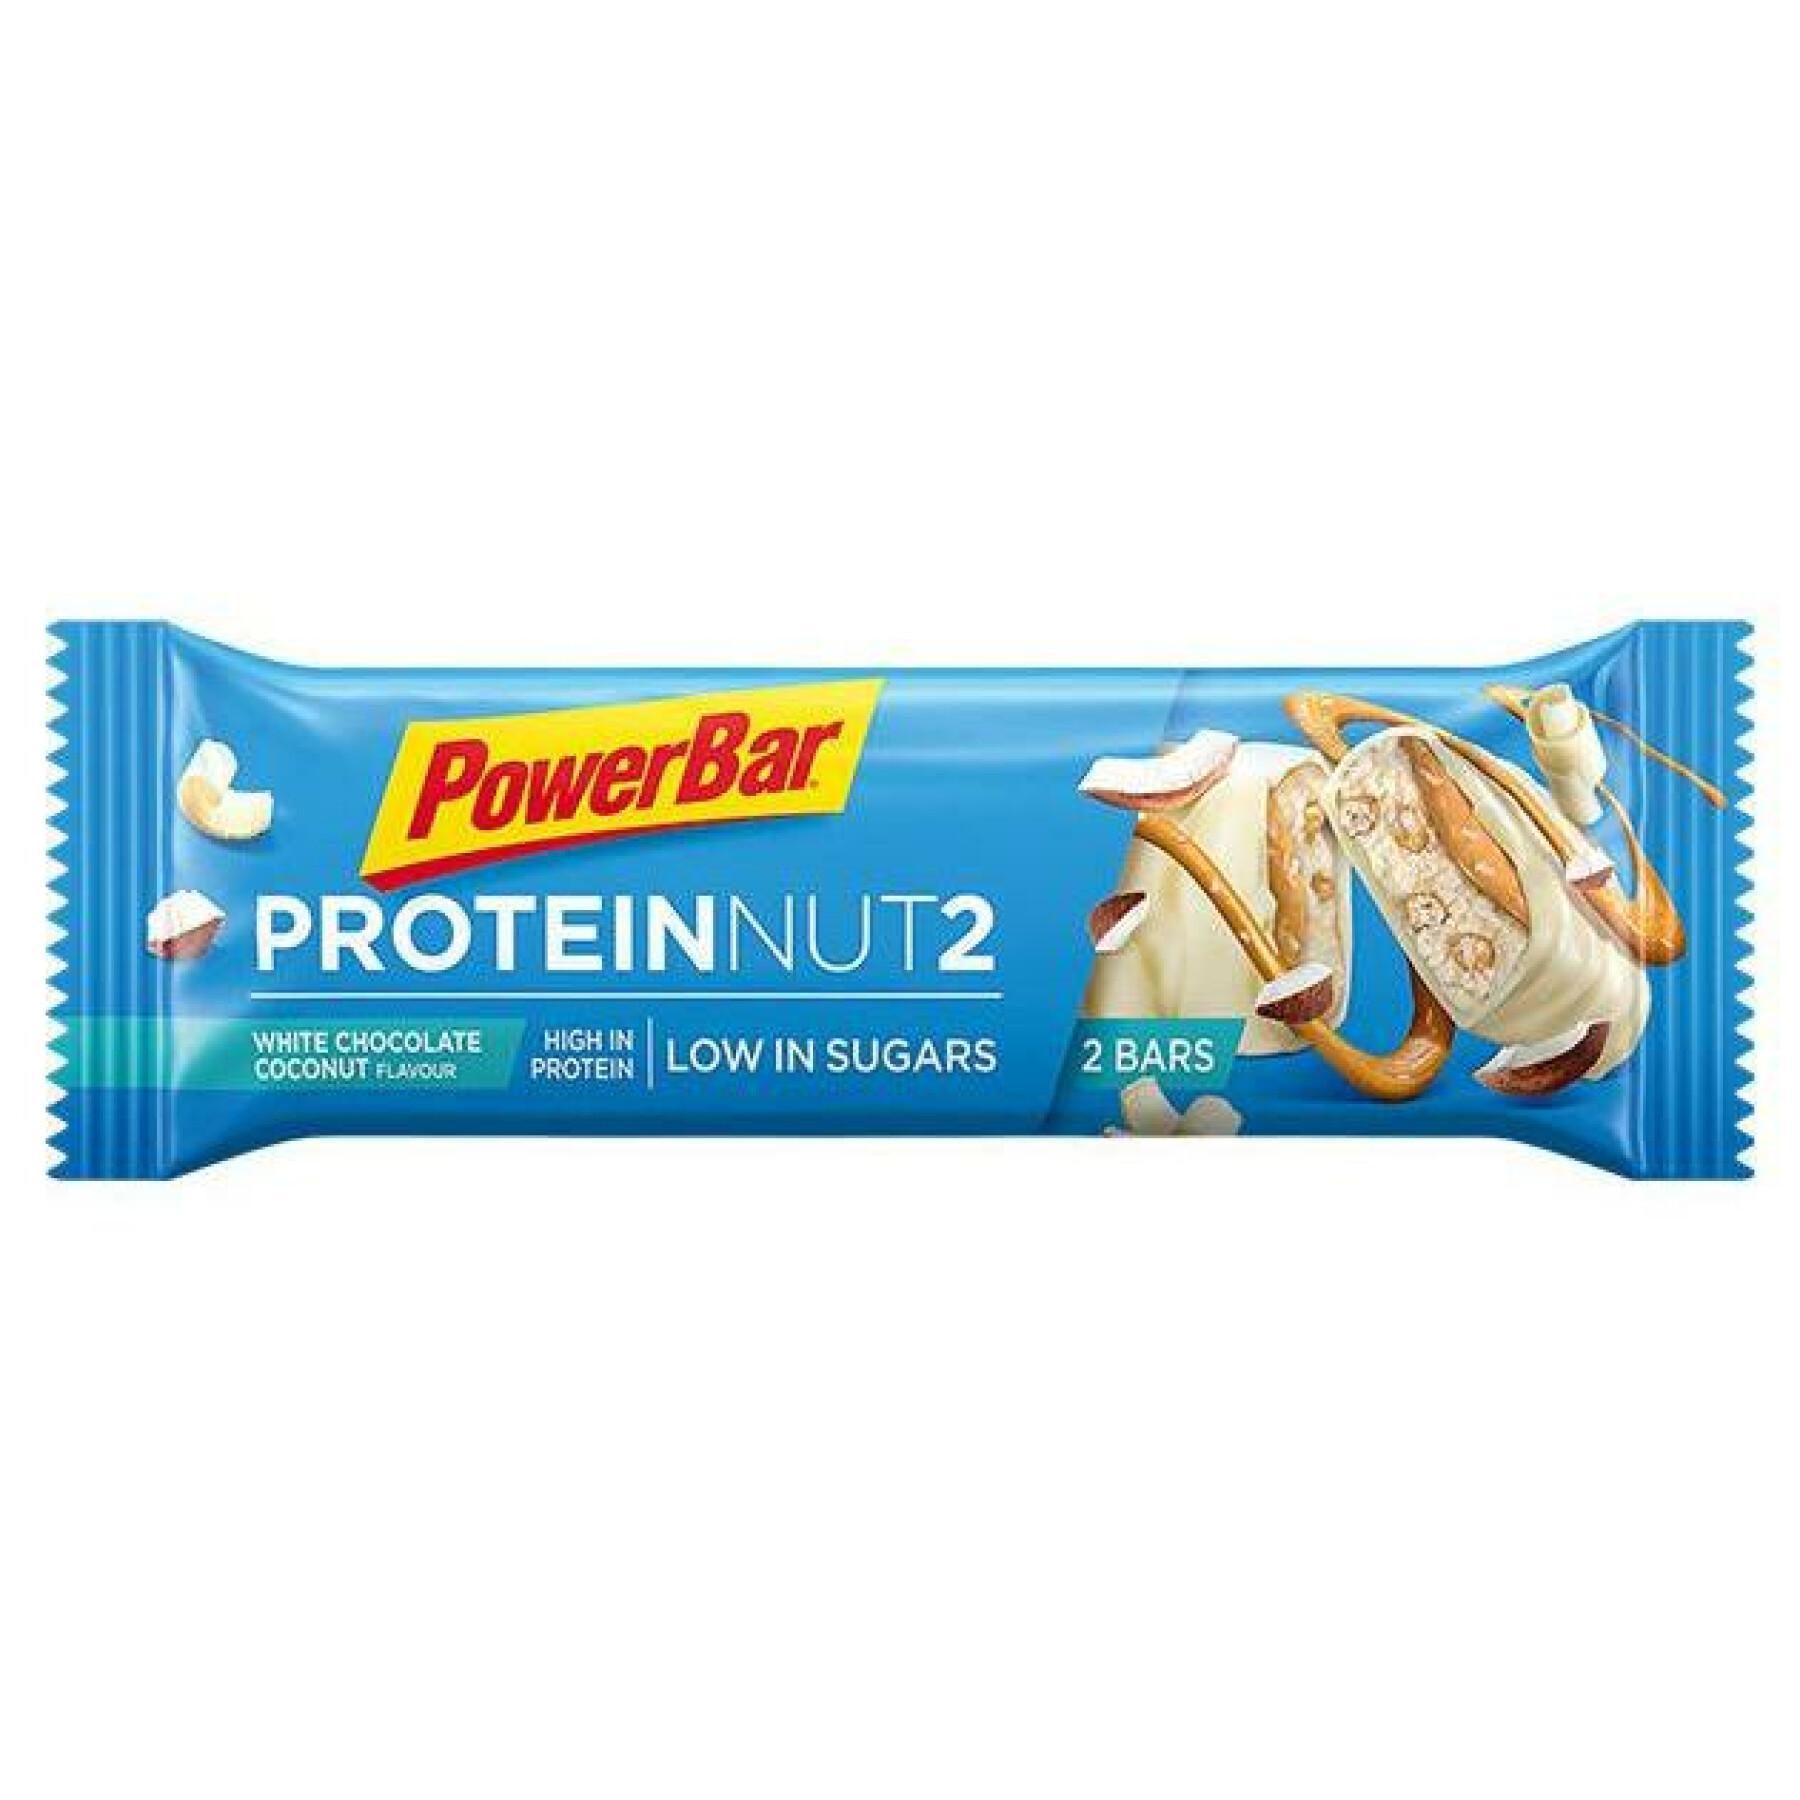 Pacote de 18 barras PowerBar Protein Nut2 - White Chocolate coconut